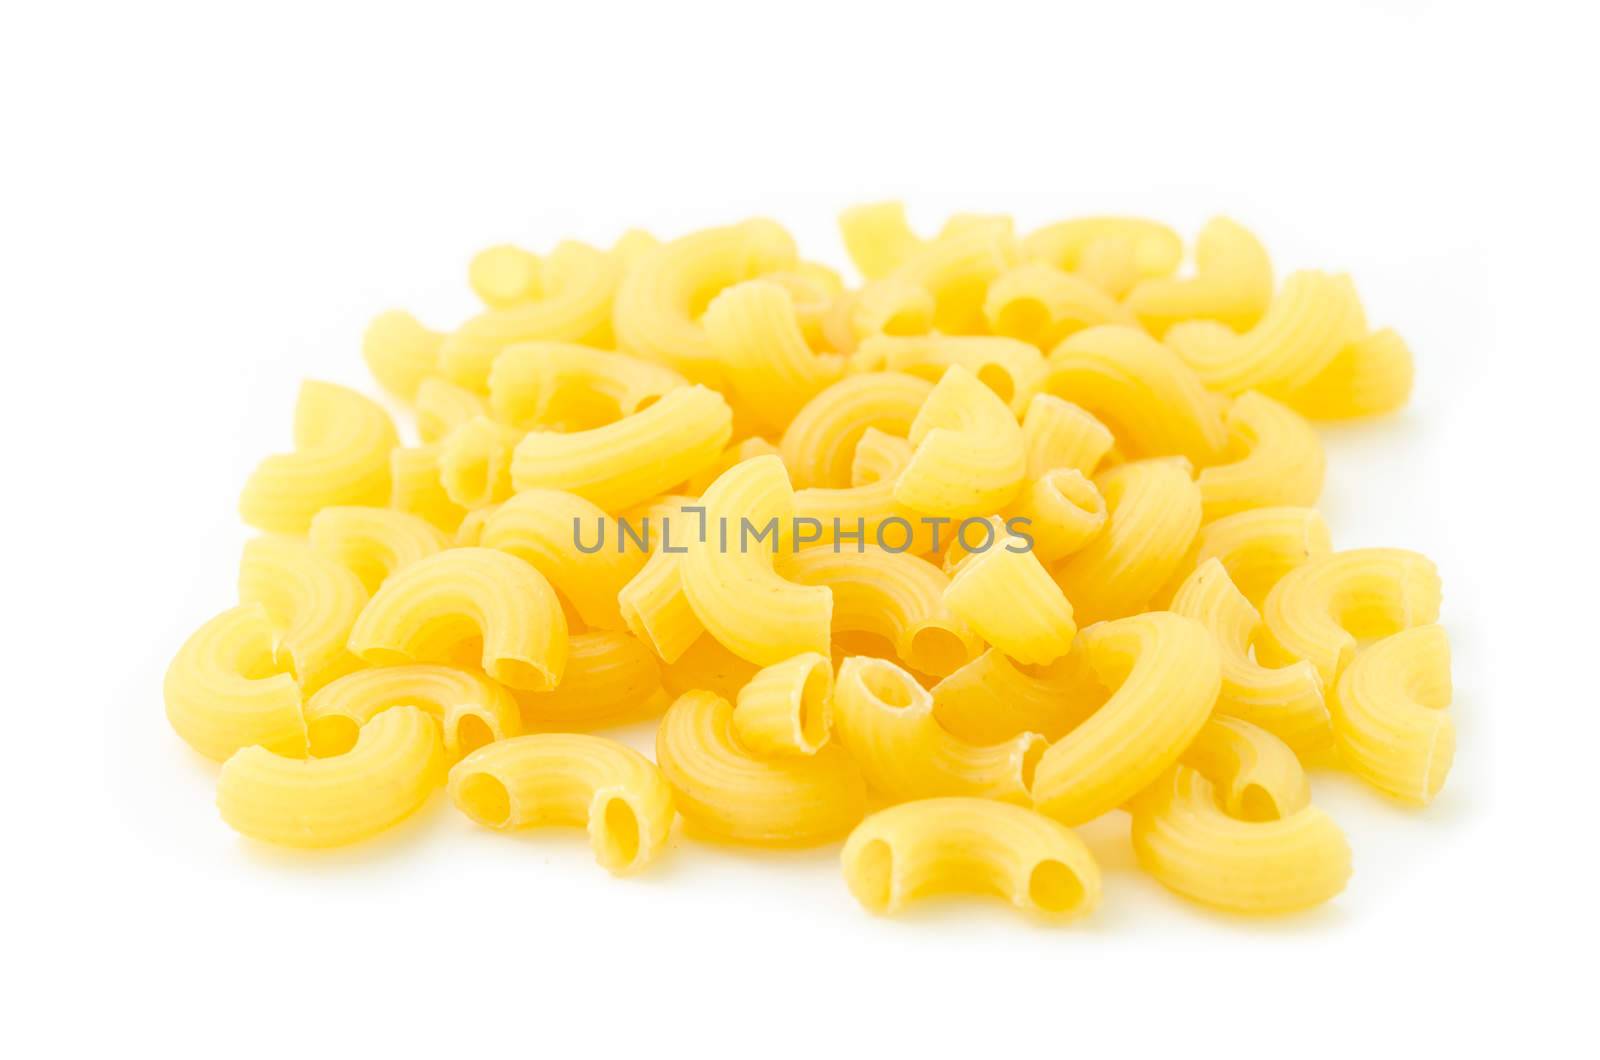 Raw Elbow Macaroni (Gomiti Pasta) Isolated on White Background